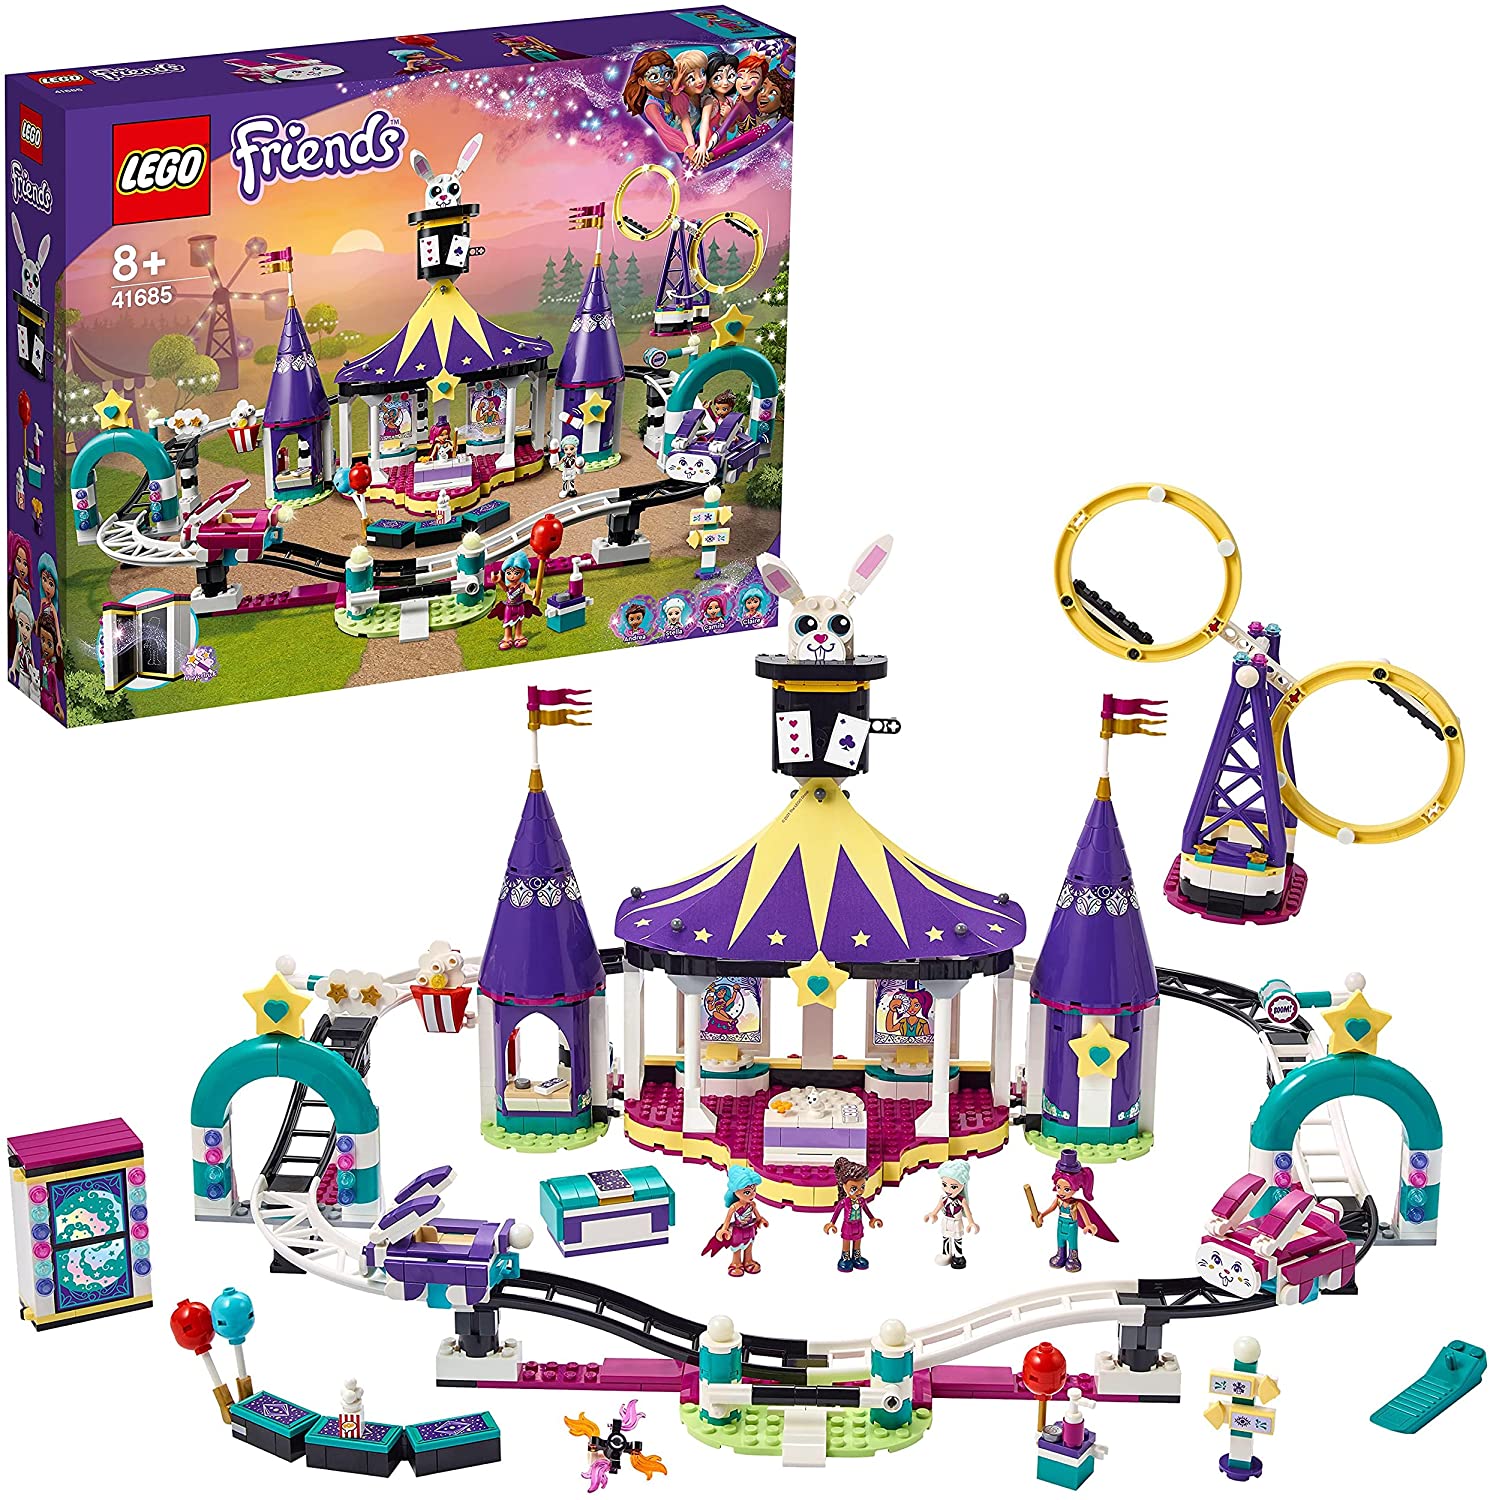 LEGO 41685 Friends Magic Fair Railway, Leisure and Amusement Park with Magi